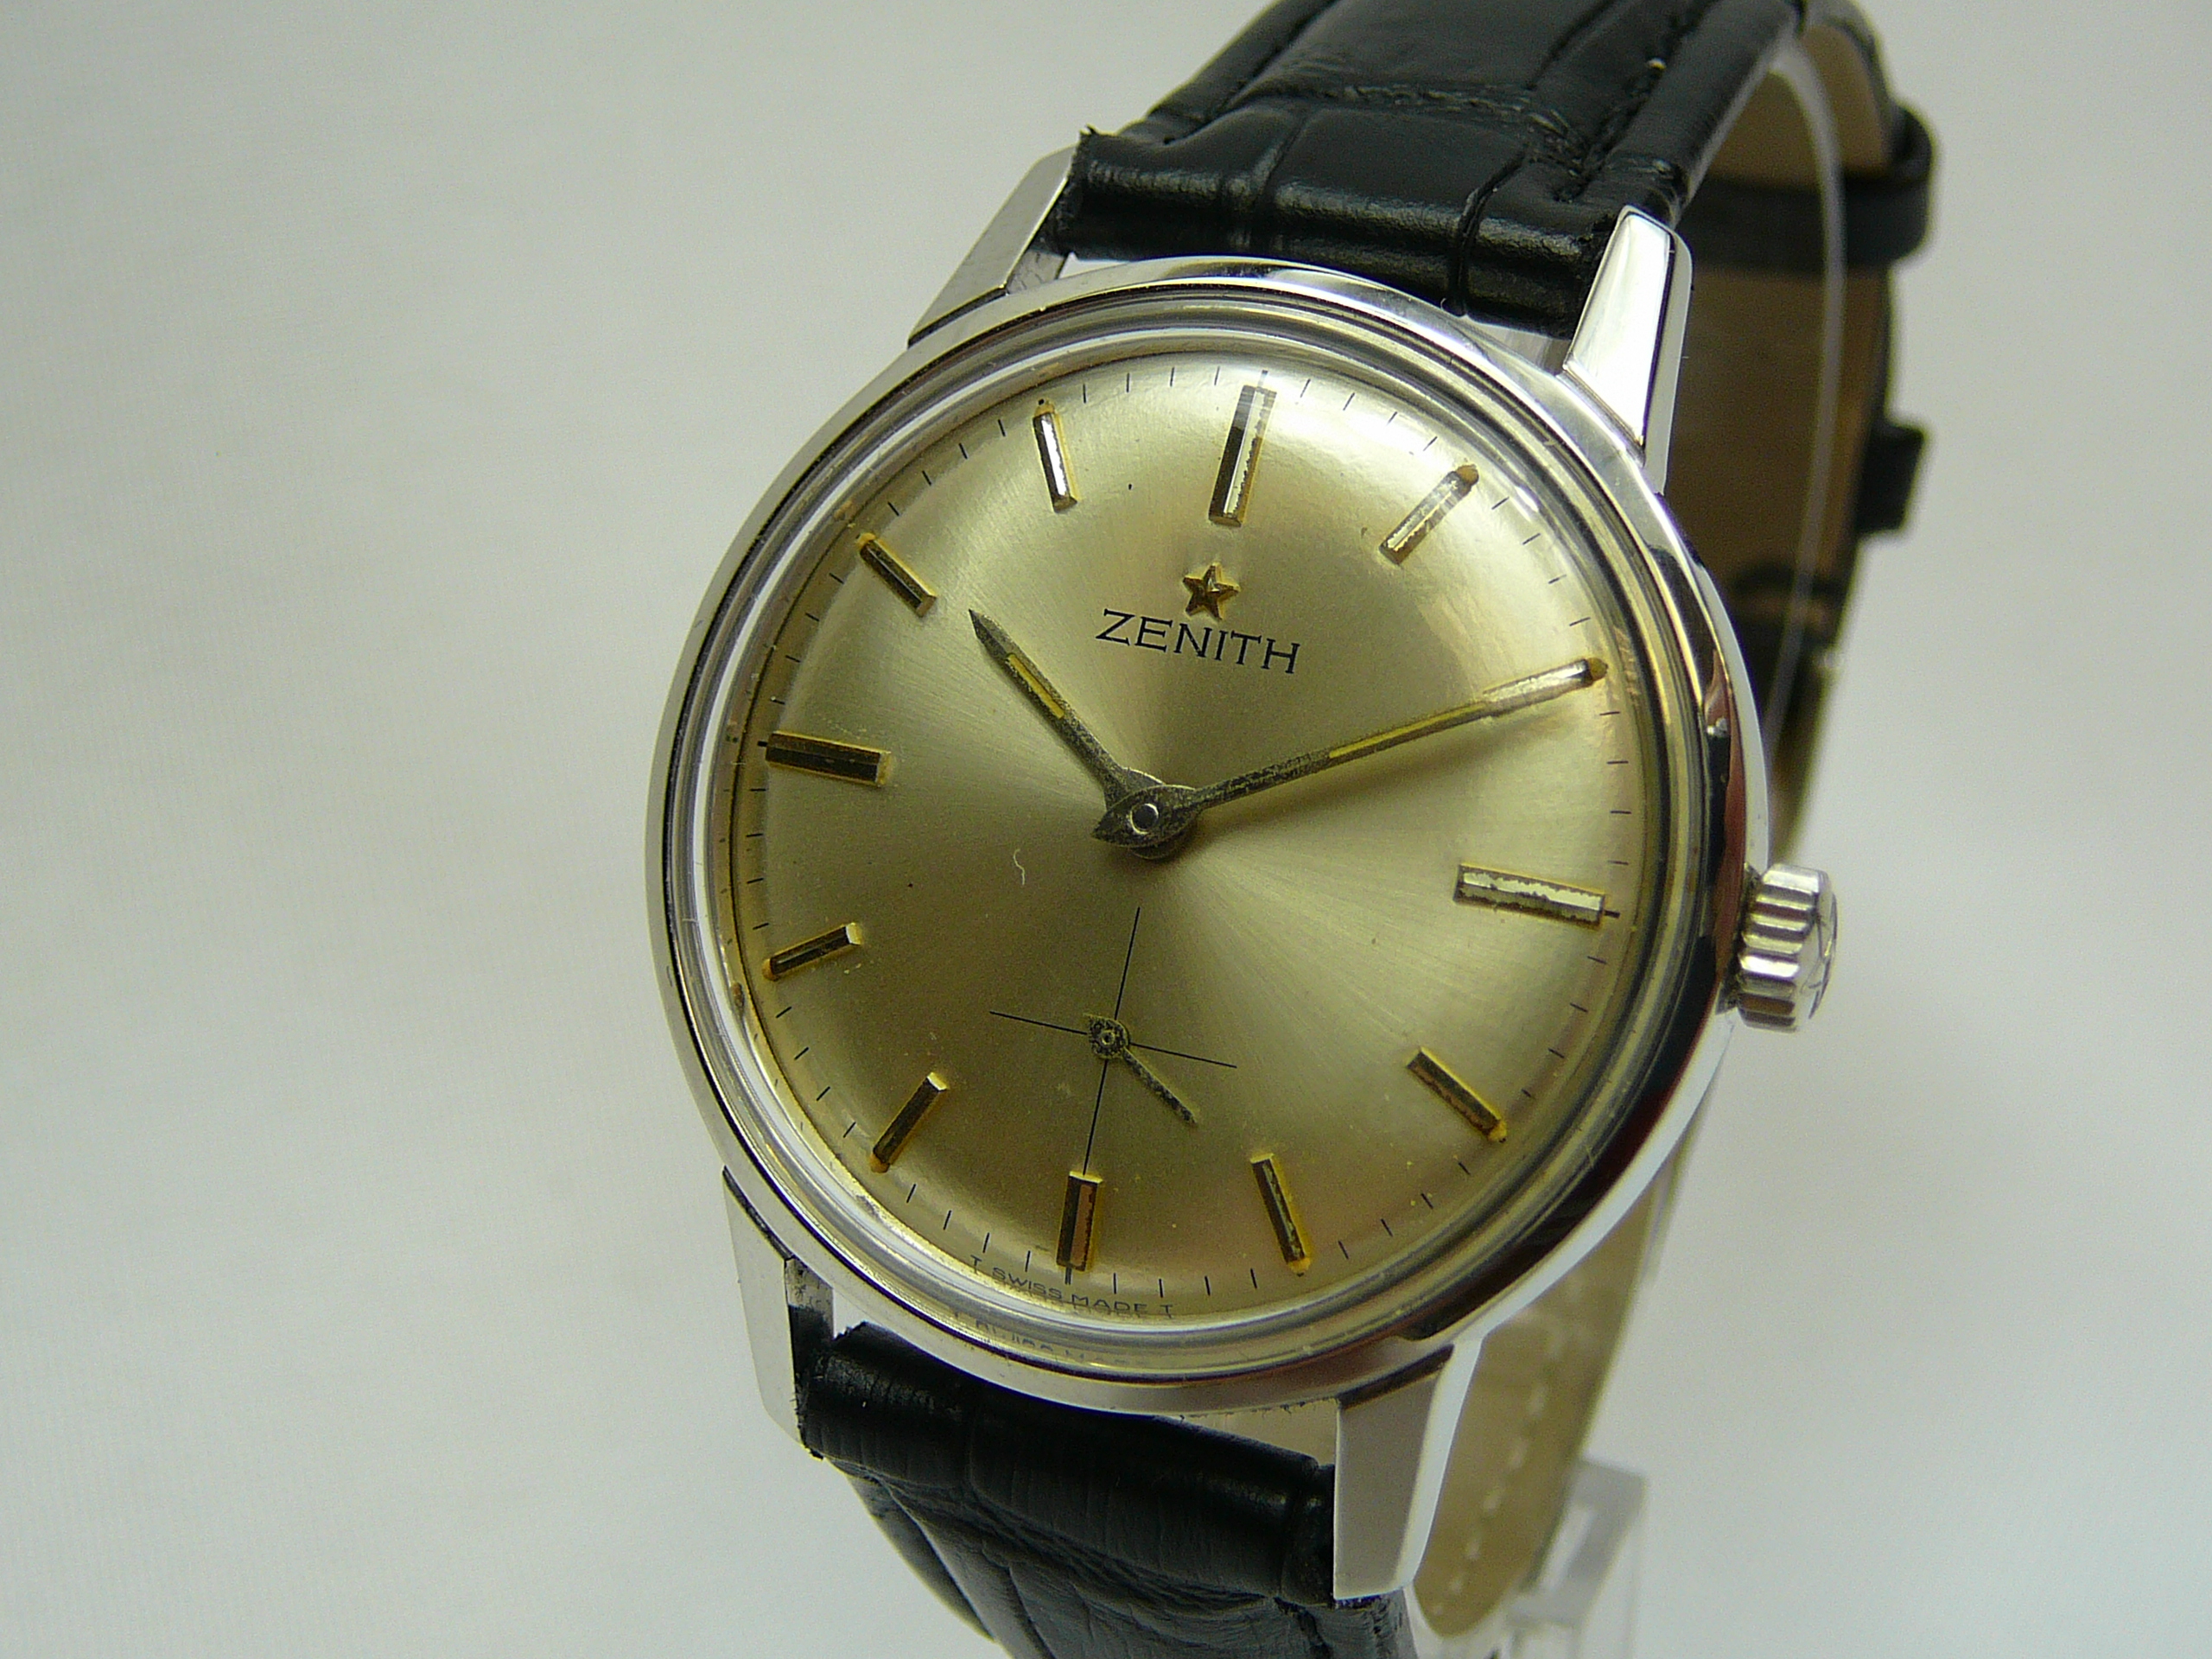 Gents Vintage Zenith Wrist Watch - Image 2 of 3